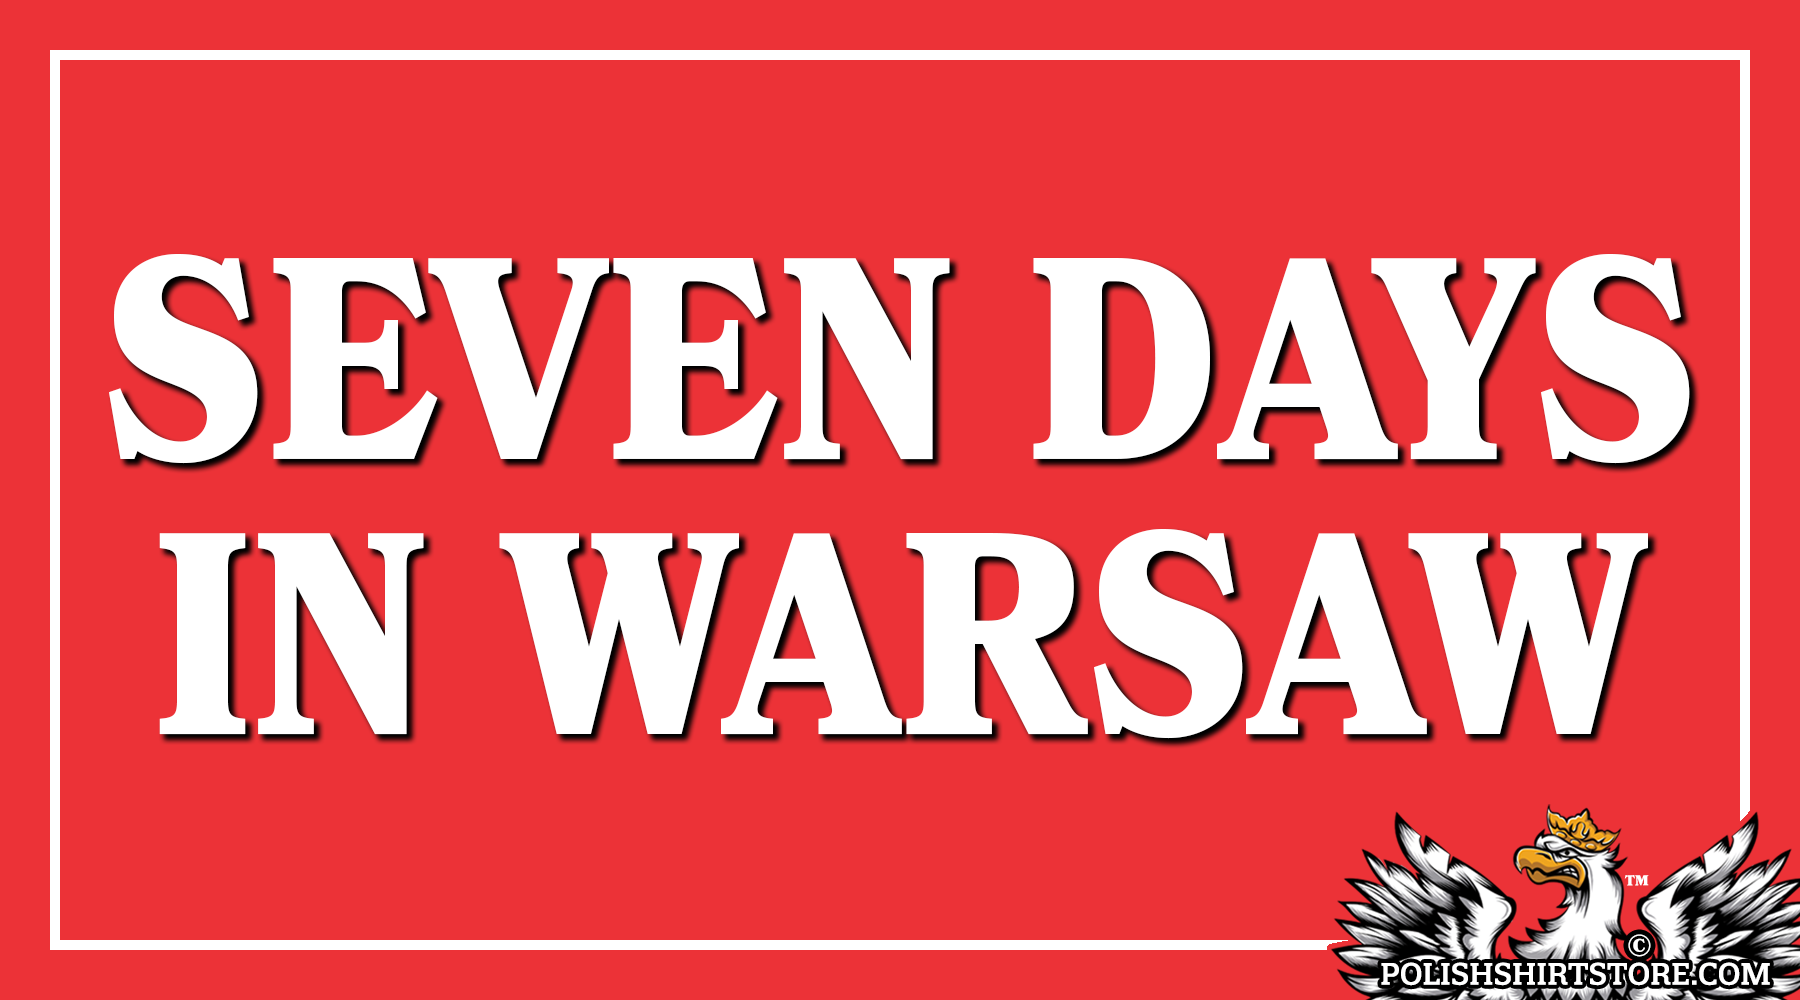 Seven Days In Warsaw